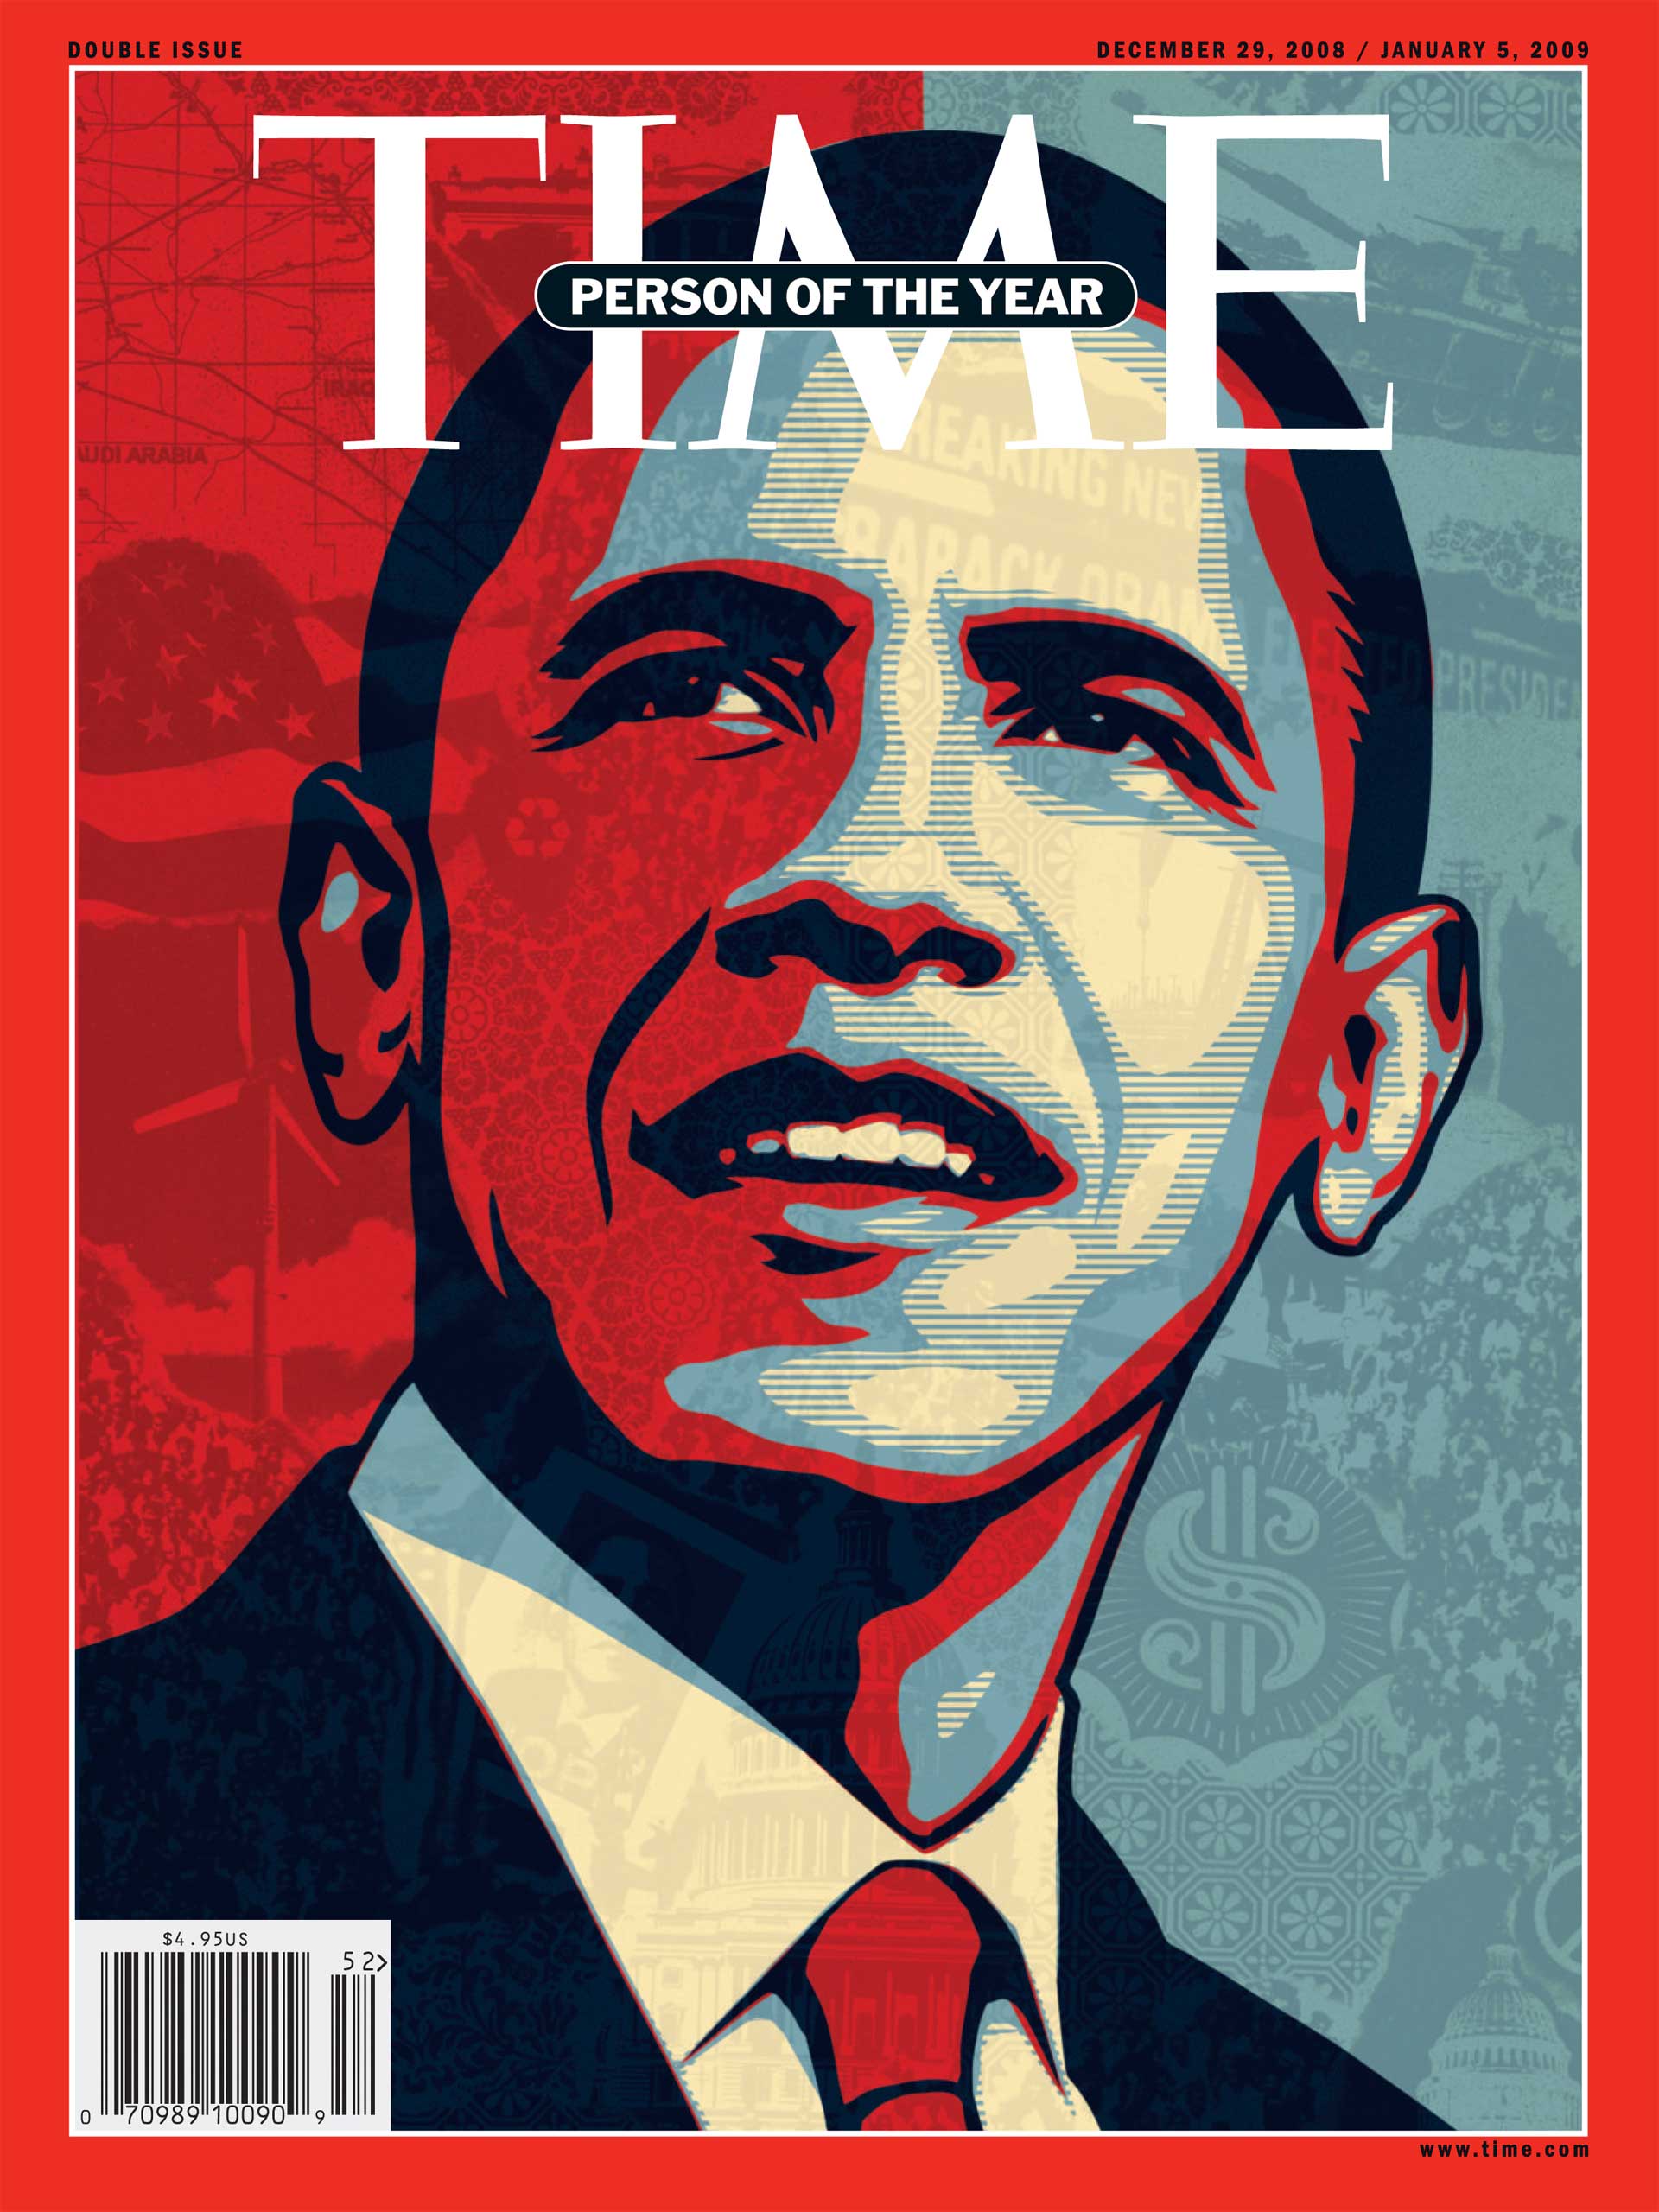 2008: President Barack Obama